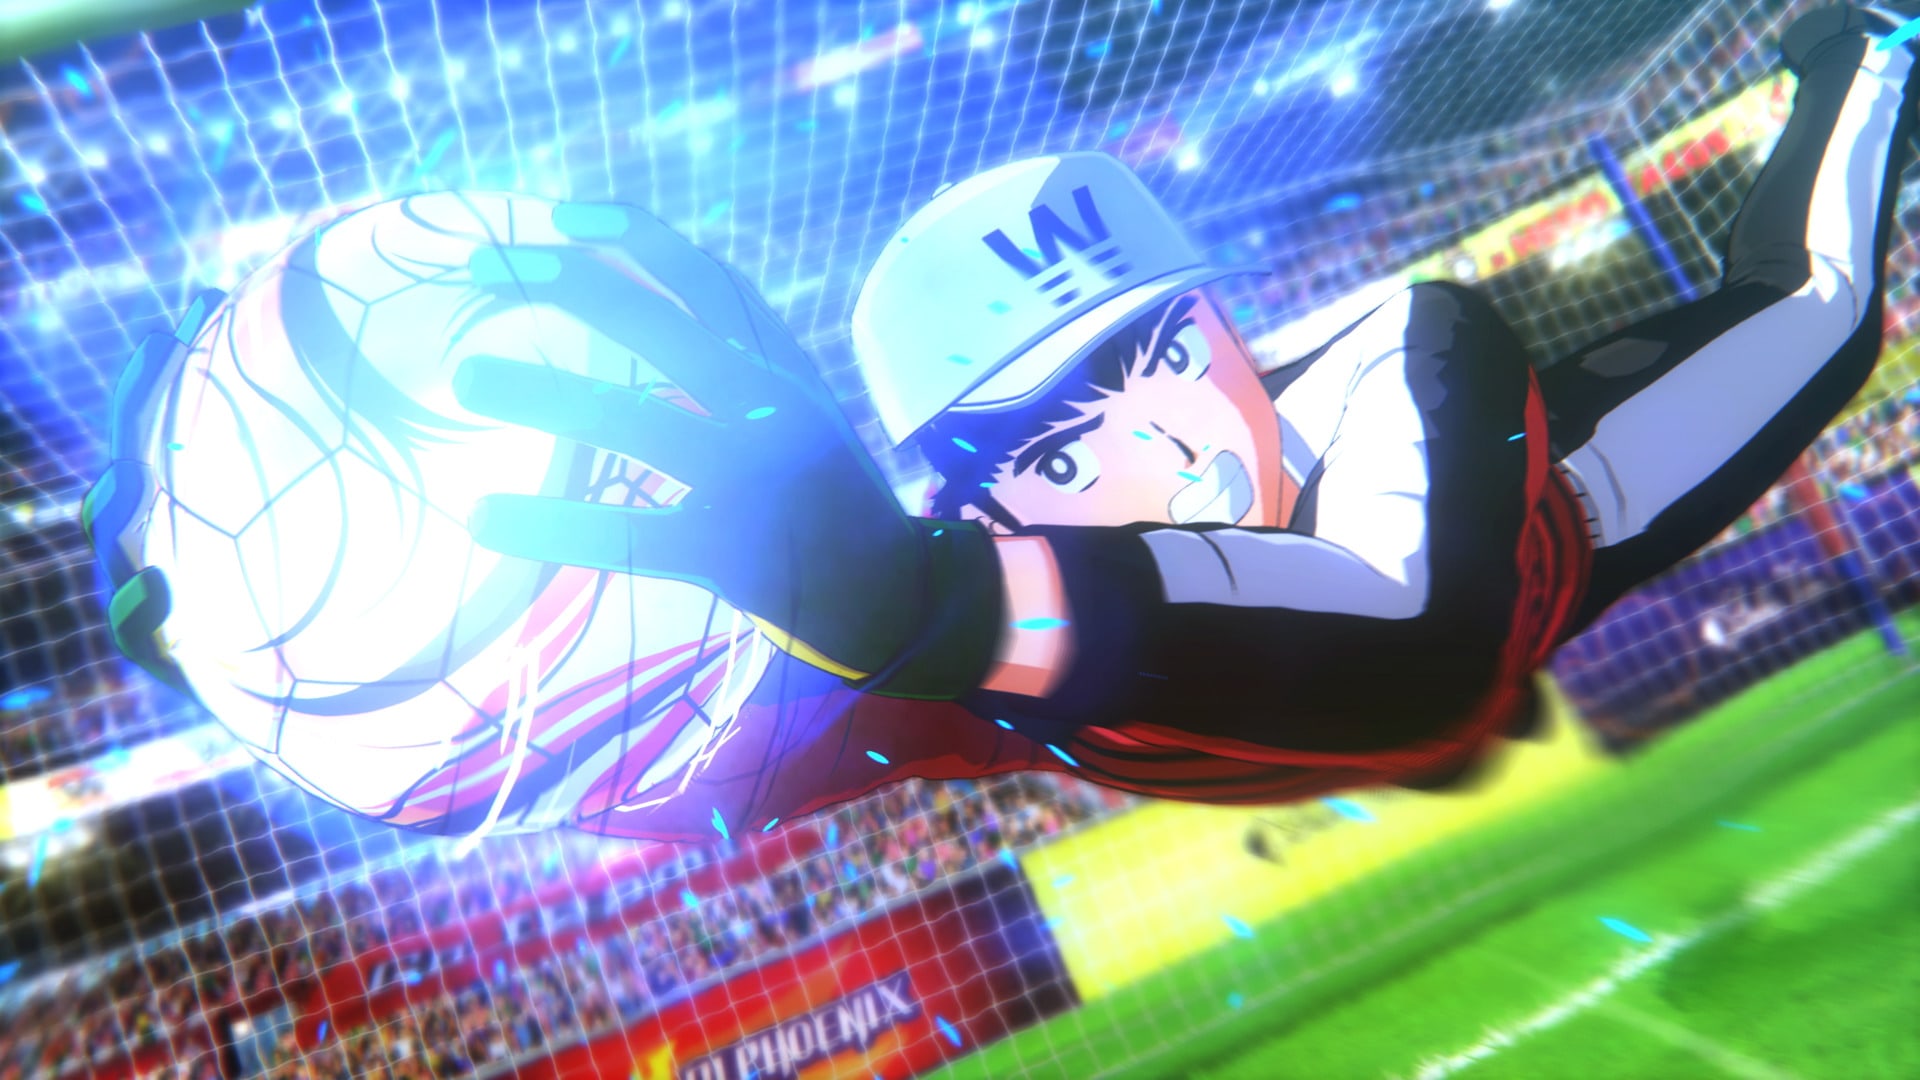 994377 descargar imagen videojuego, captain tsubasa: rise of new champions: fondos de pantalla y protectores de pantalla gratis